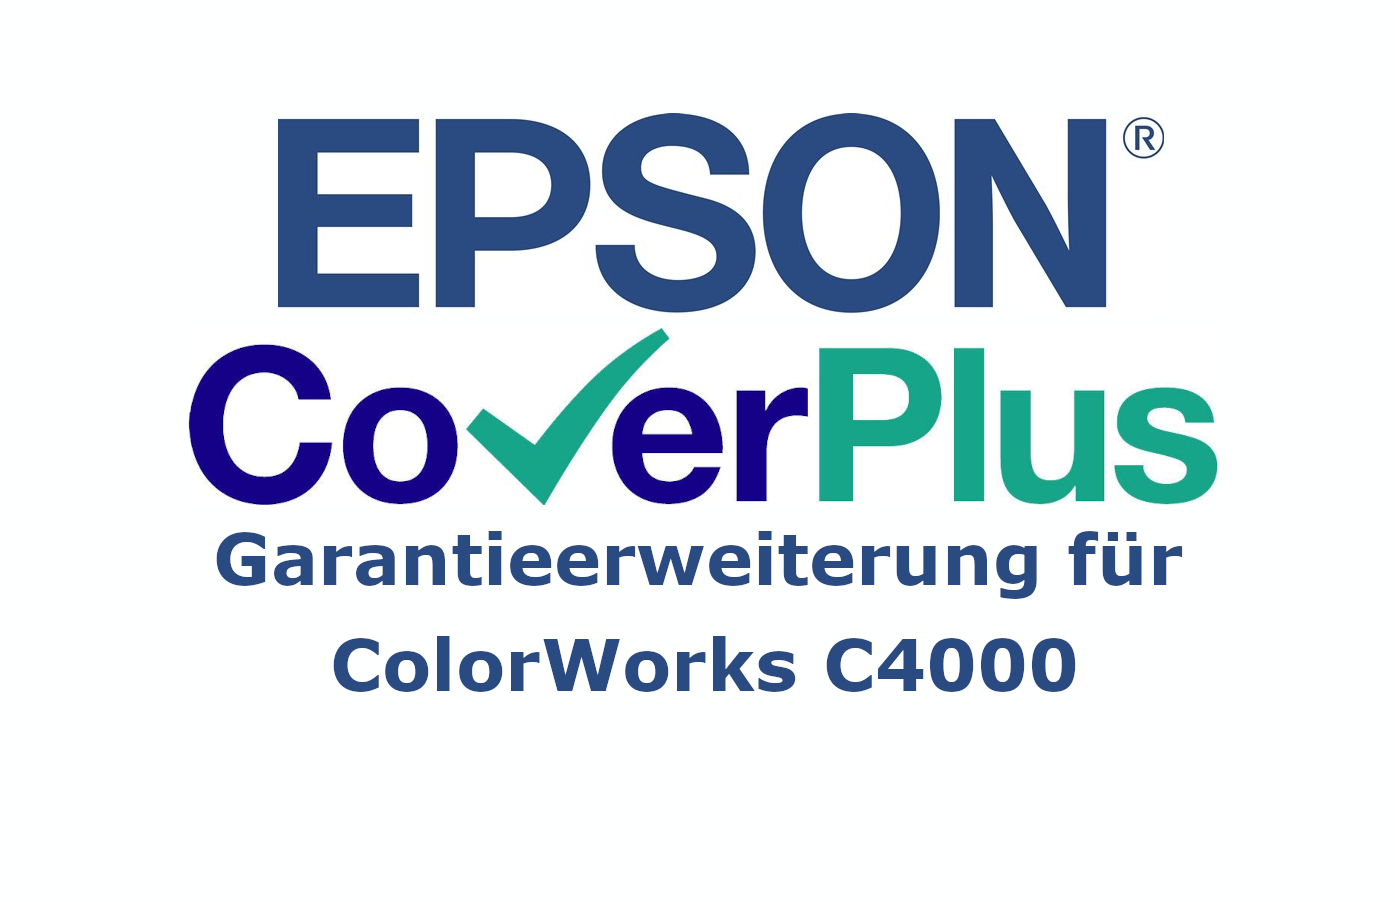 Kuva EPSON ColorWorks Series C4000 - CoverPlus
